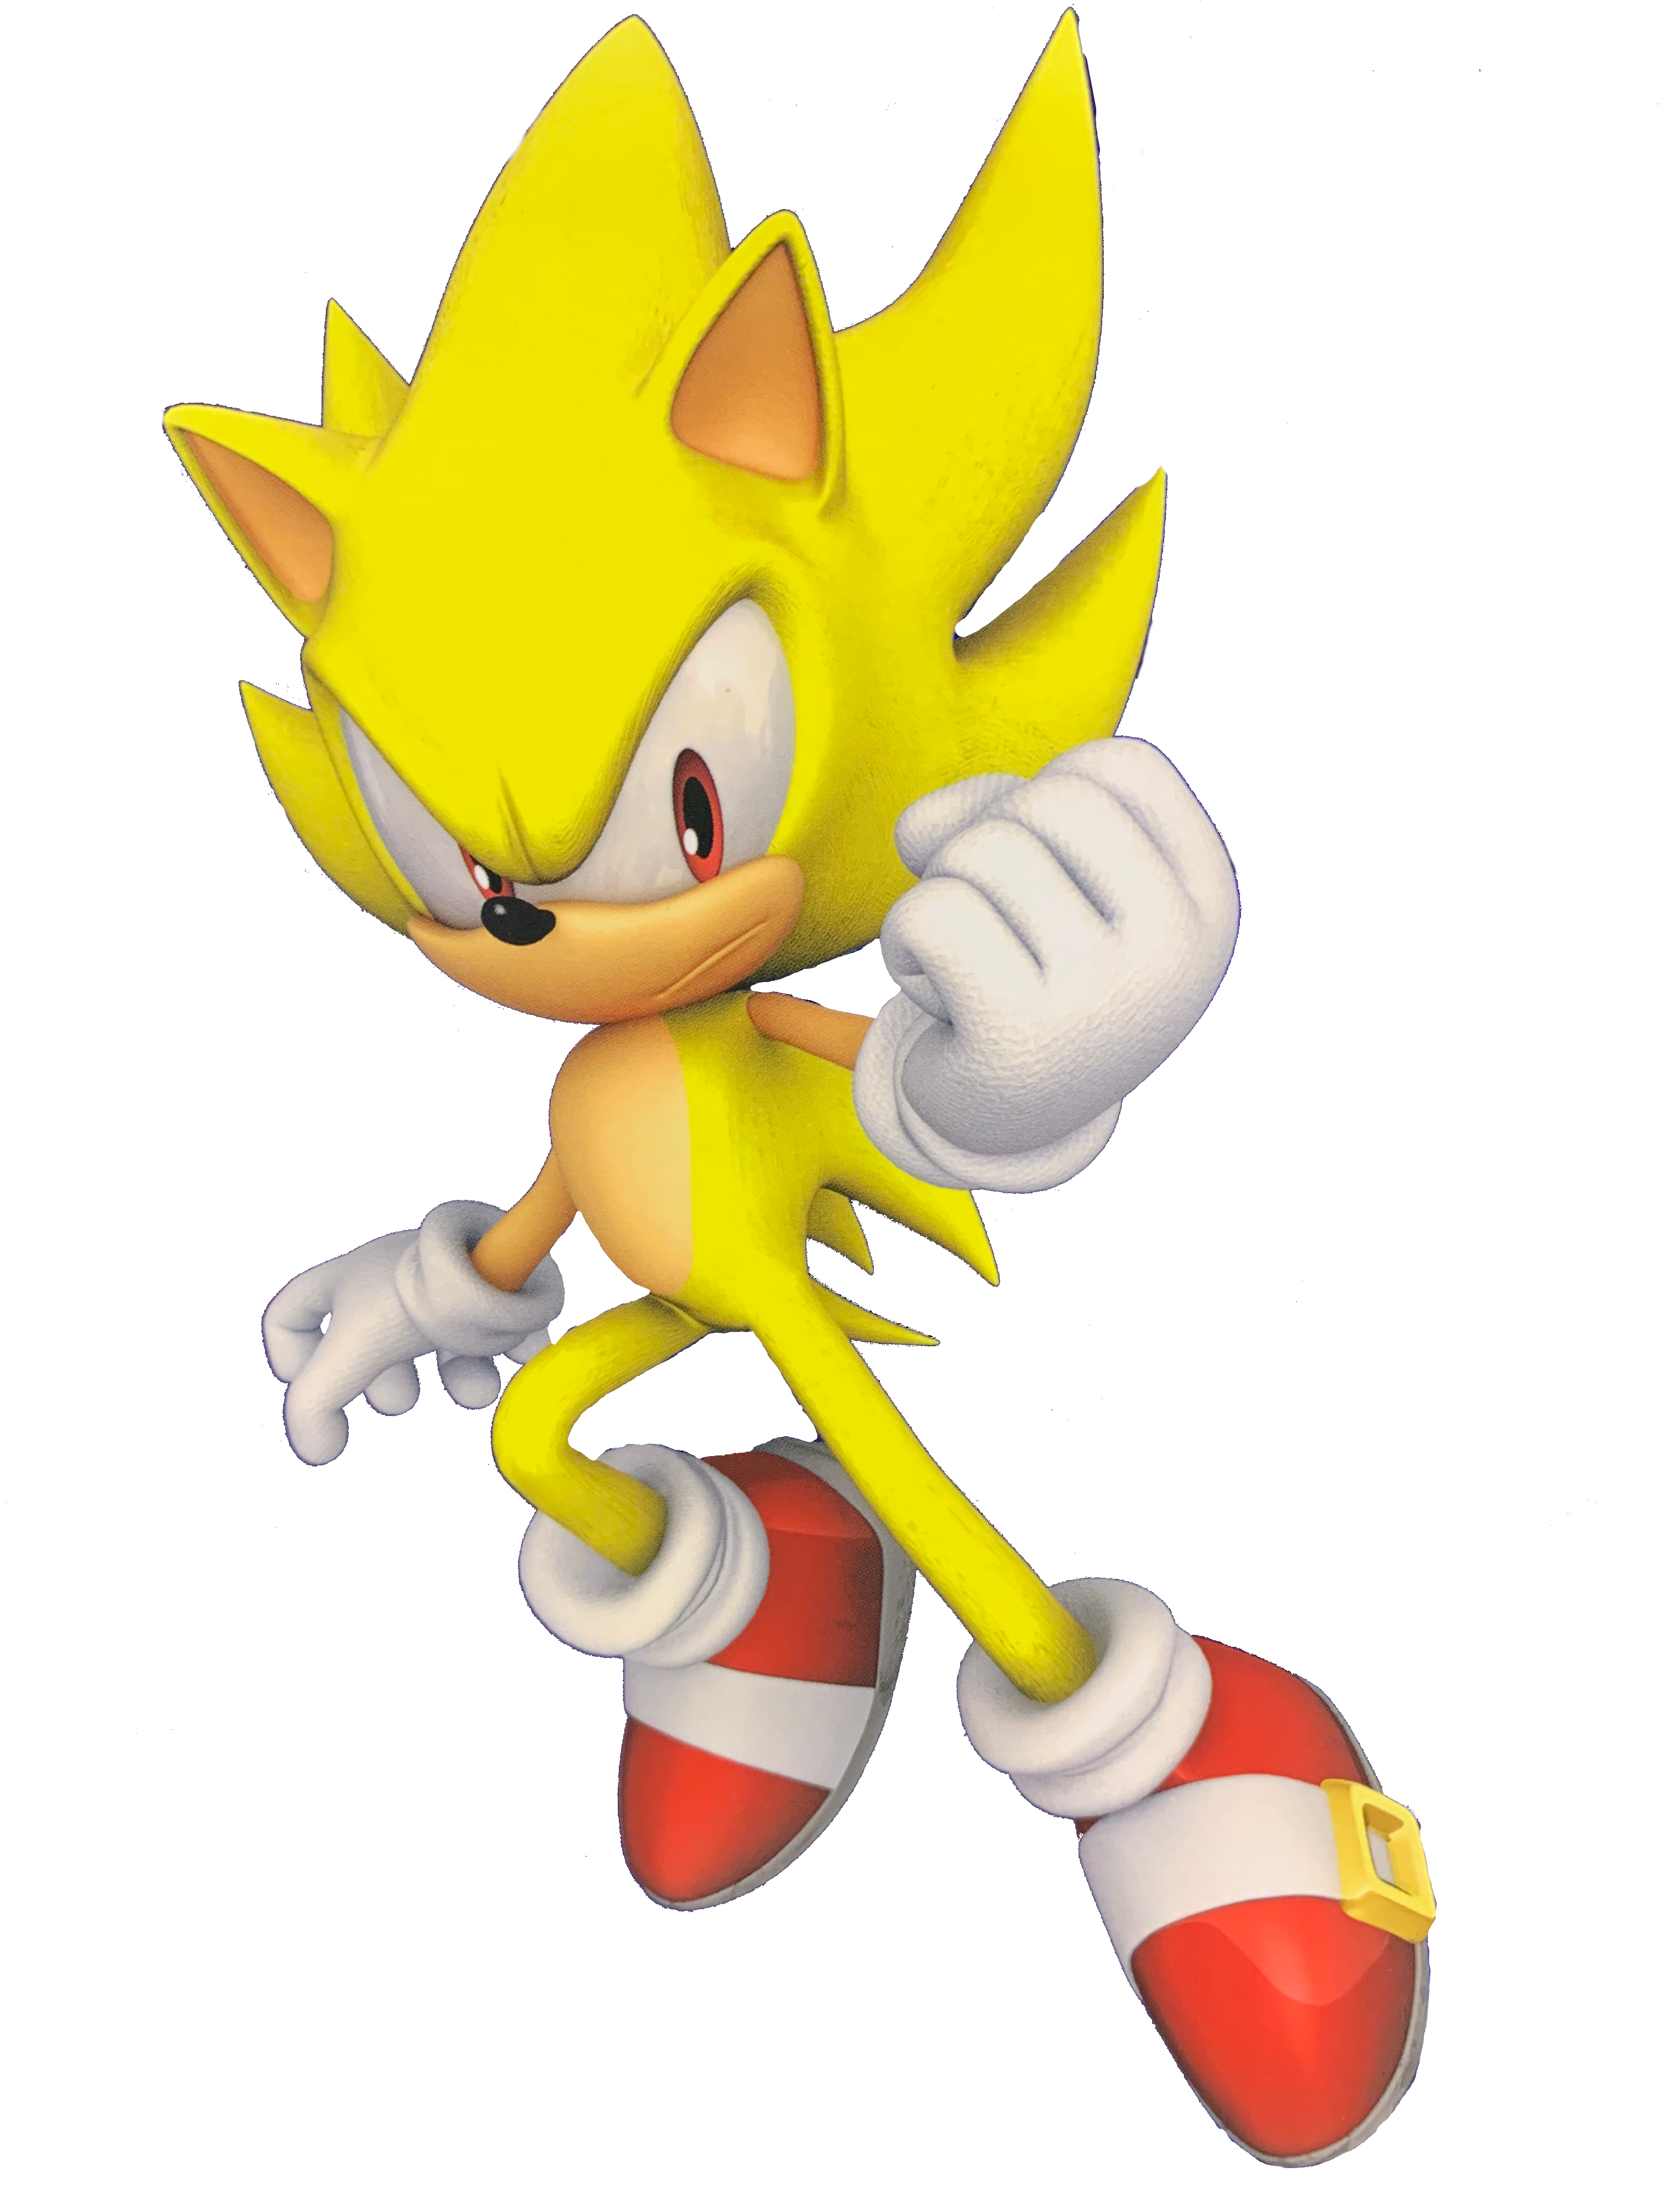 Sonic - Sonic Amarelo 7 PNG Imagens e Moldes.com.br